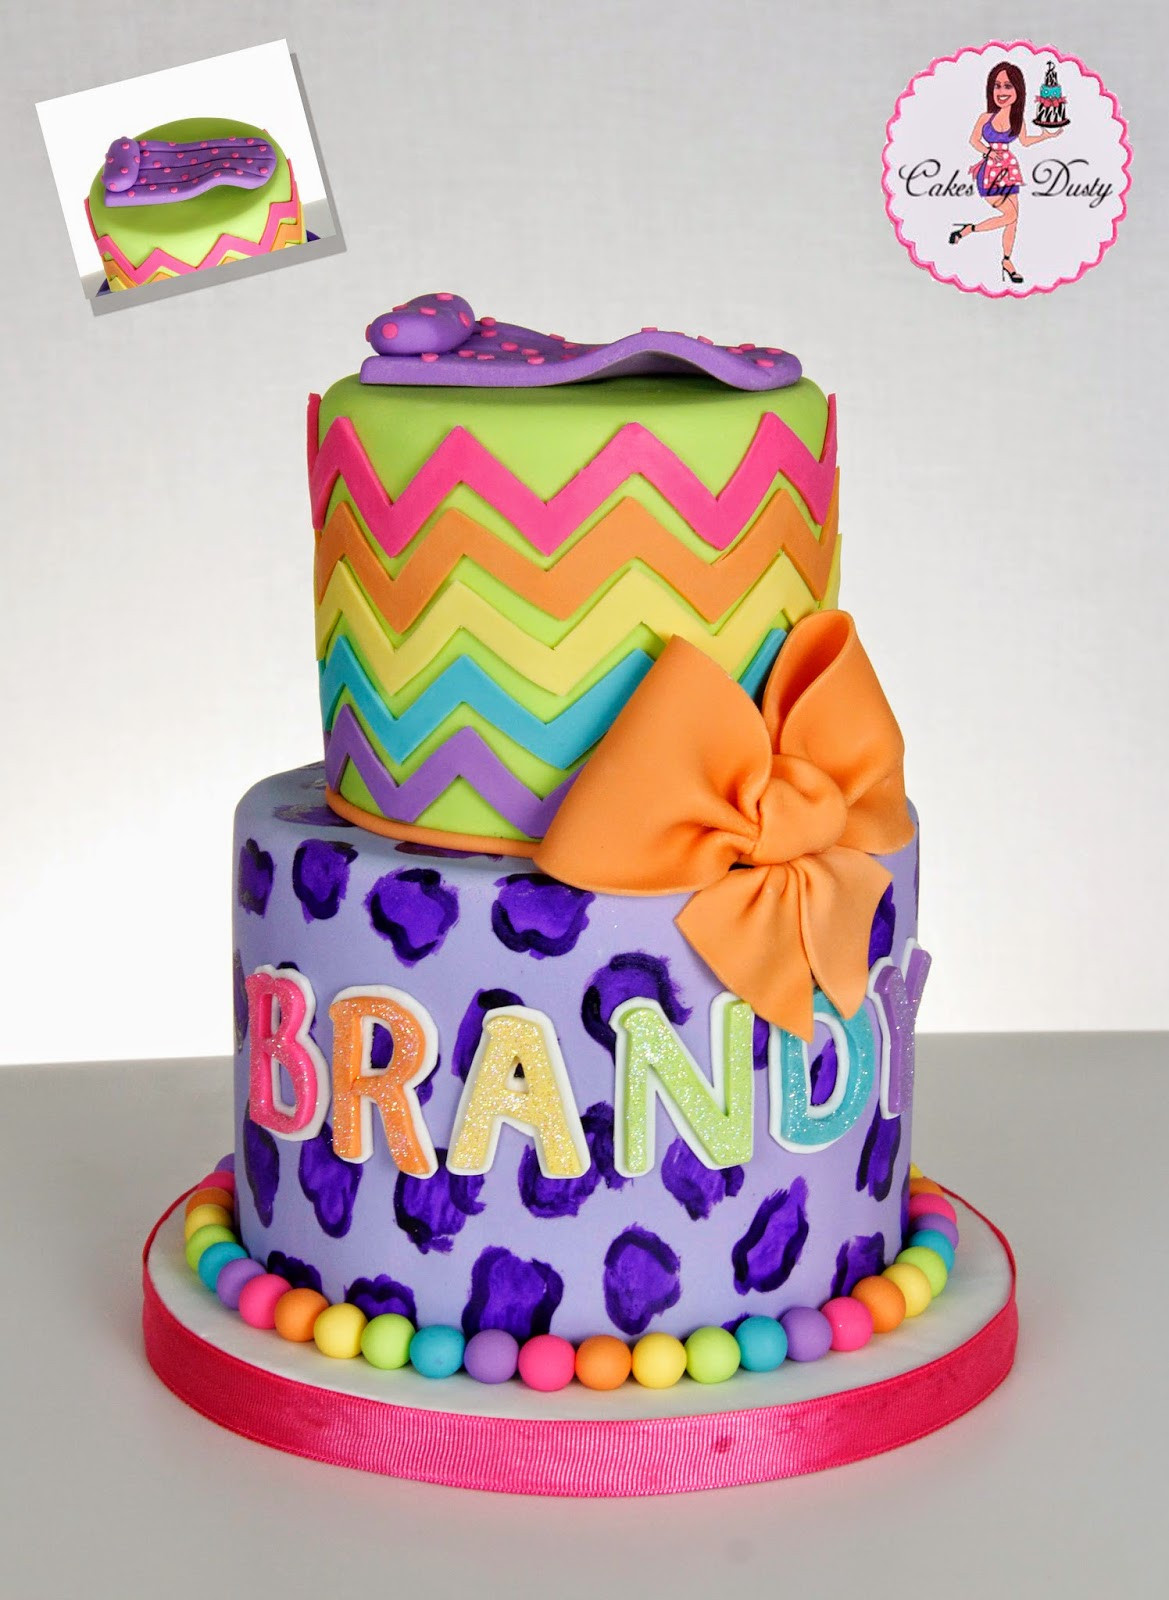 Happy Birthday Cakes Pics
 Cakes by Dusty Happy Birthday Brandy